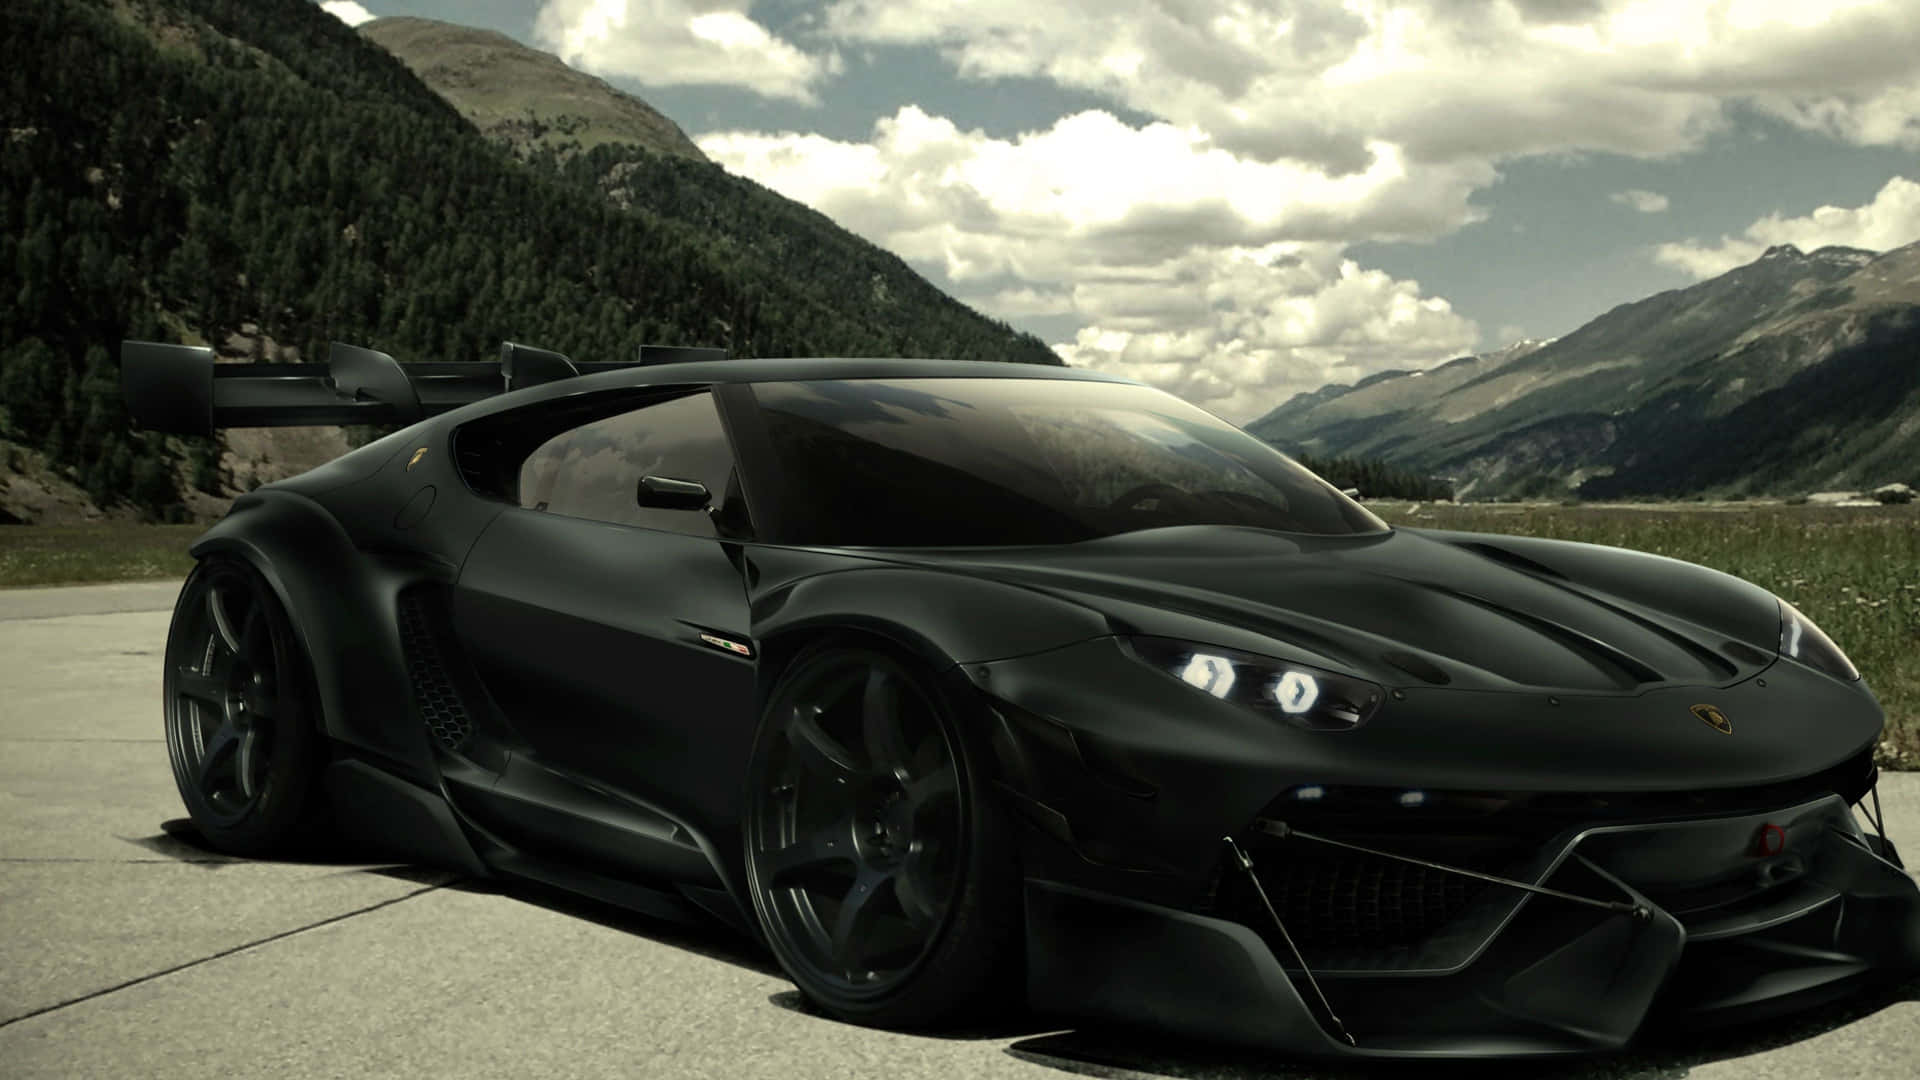 "The Futuristic Luxury of a 4k Lamborghini"